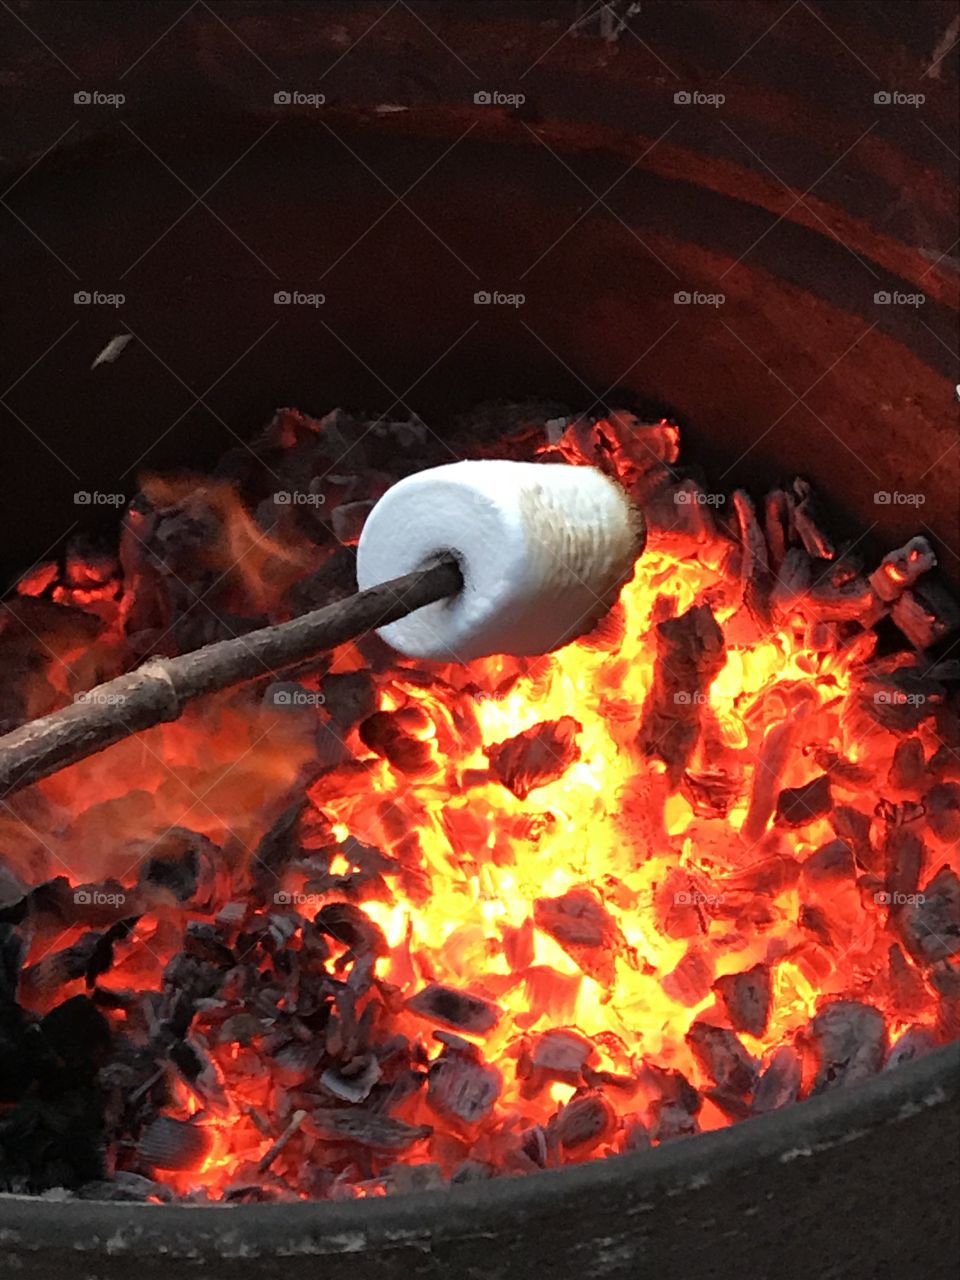 Toasting marshmallows over hot coals